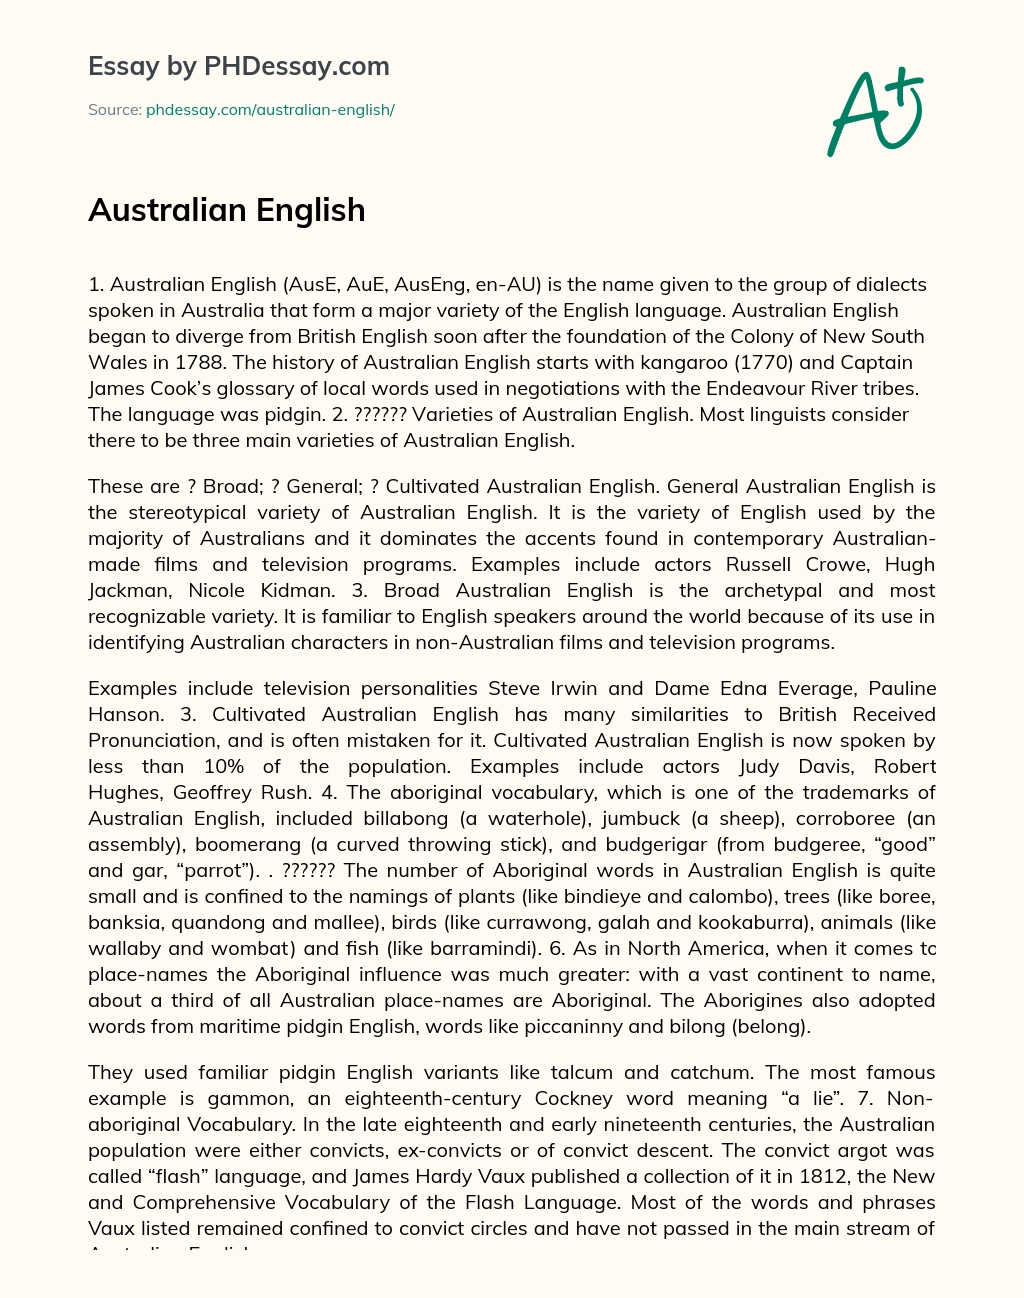 Australian English essay